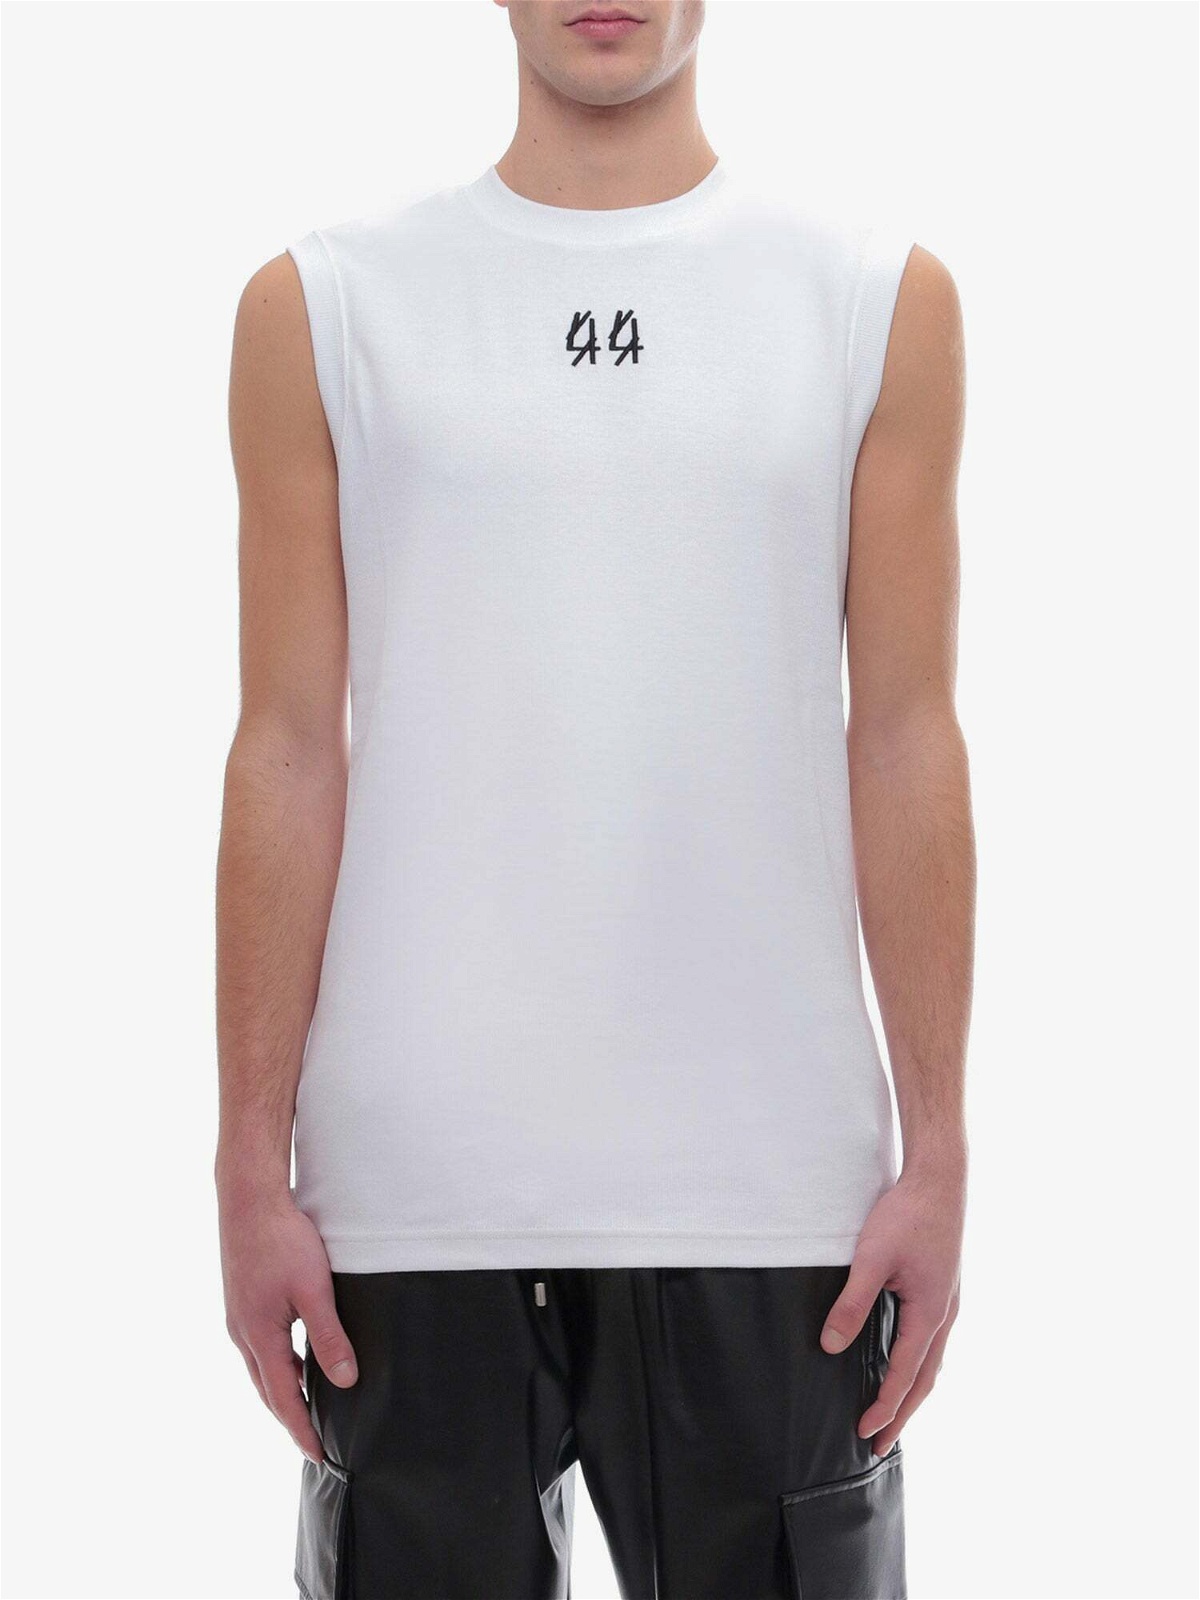 44 Label Group T Shirt White   Mens